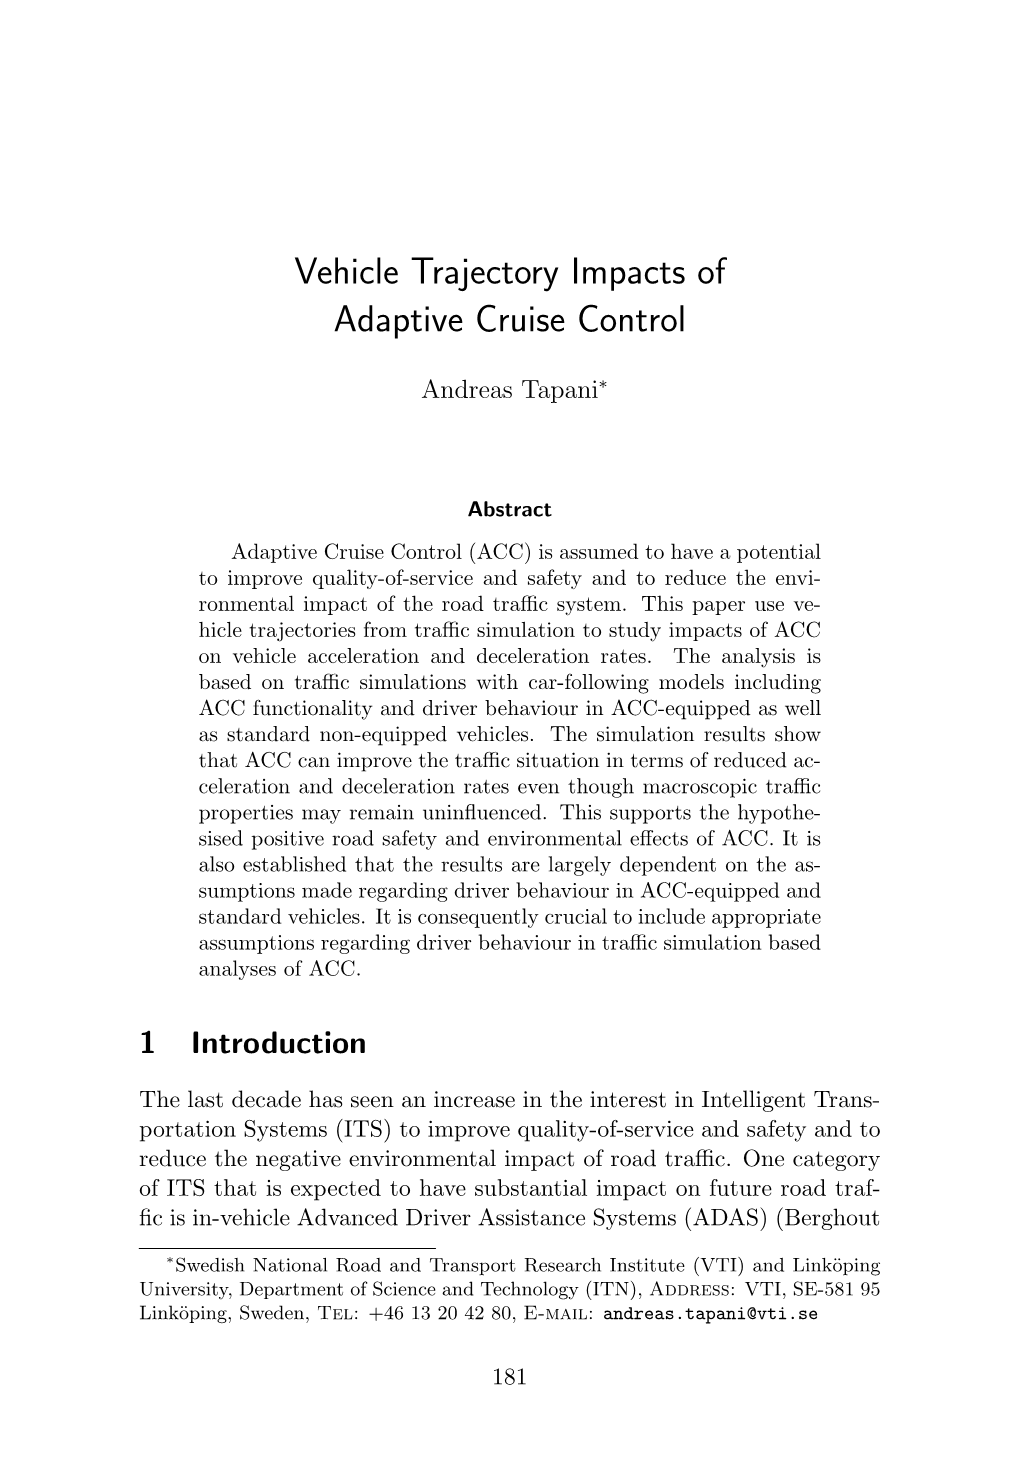 Vehicle Trajectory Impacts of Adaptive Cruise Control